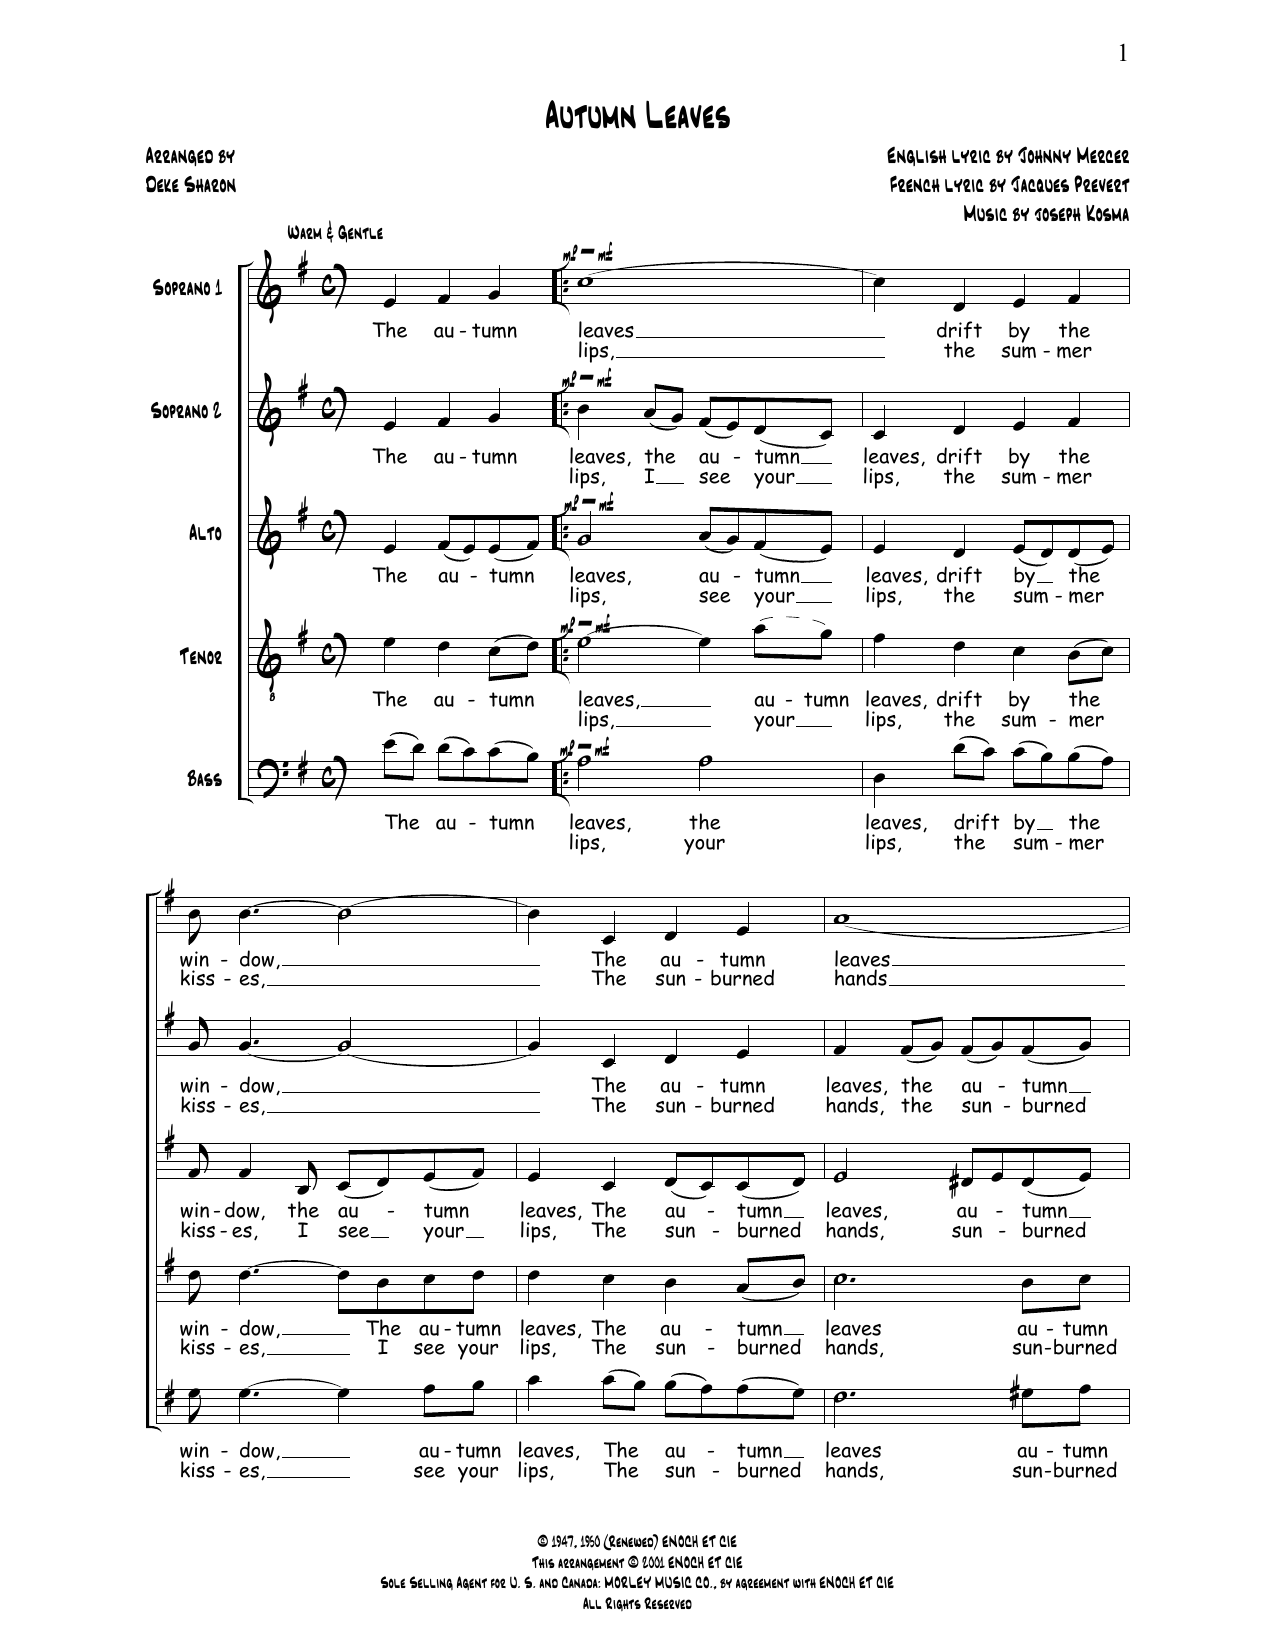 Deke Sharon Autumn Leaves sheet music notes and chords. Download Printable PDF.